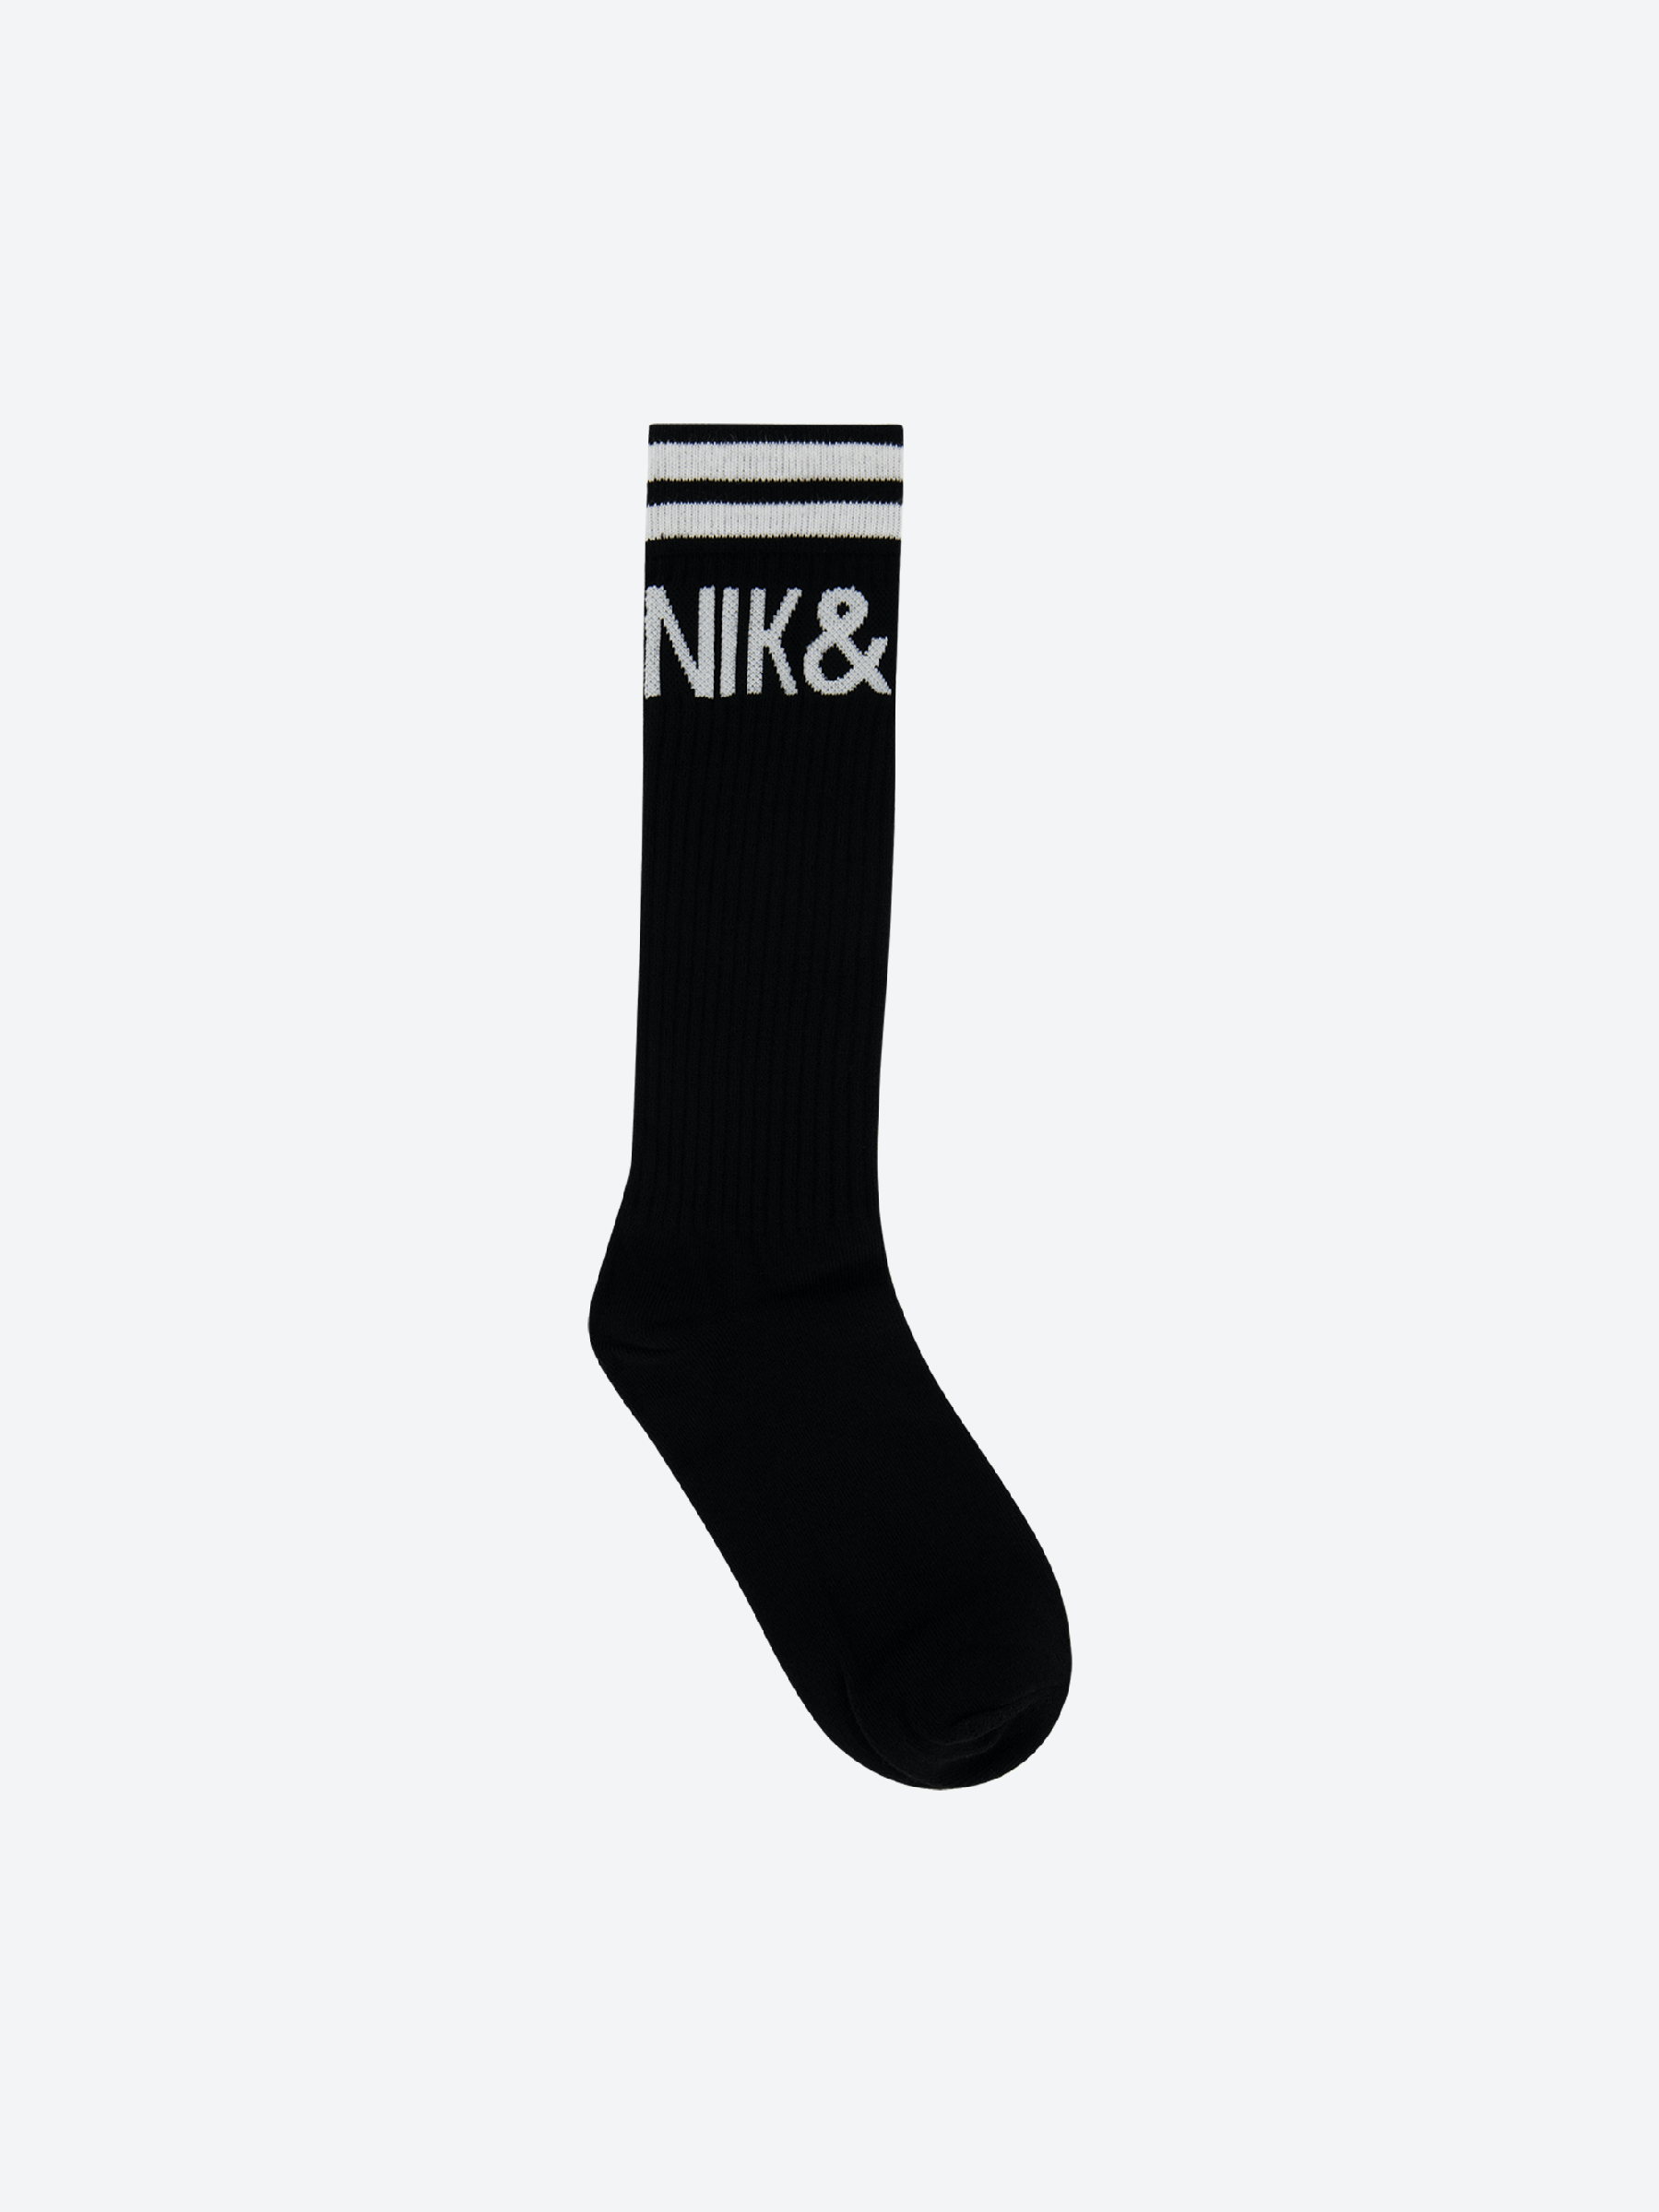 Meisjes Sporty Socks van Nik & Nik in de kleur Black in maat 38/41.